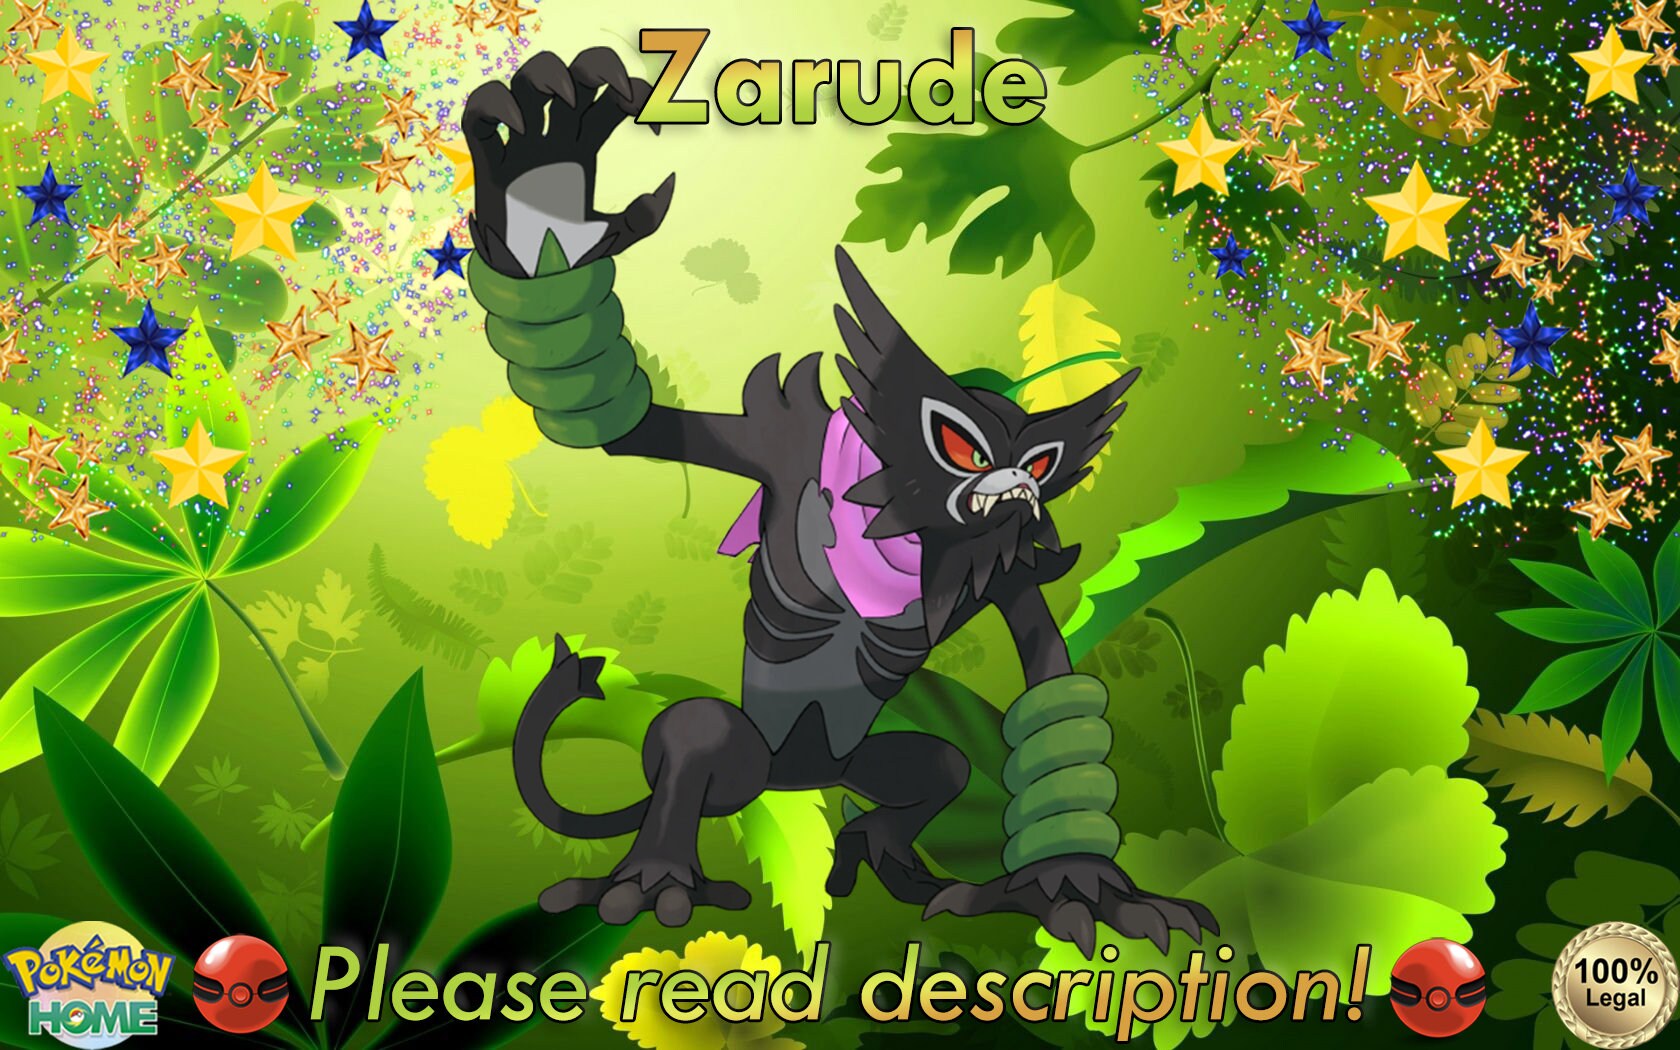 Zarude gen 8 pokemon galar isle of armor the movie coco mythical caped